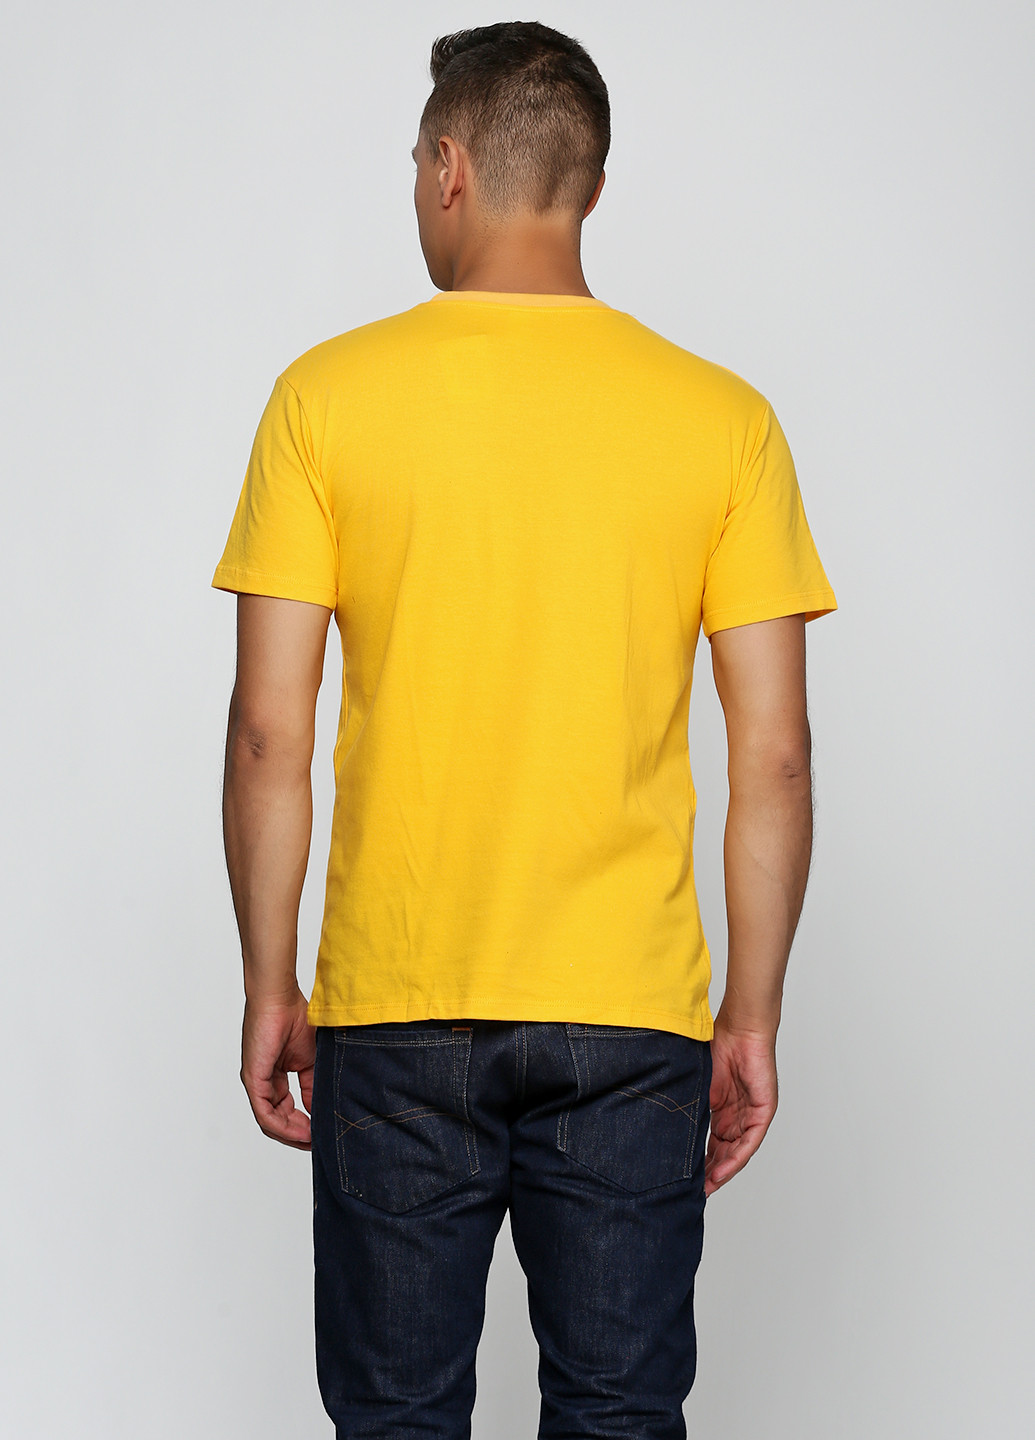 Желтая футболка Роза